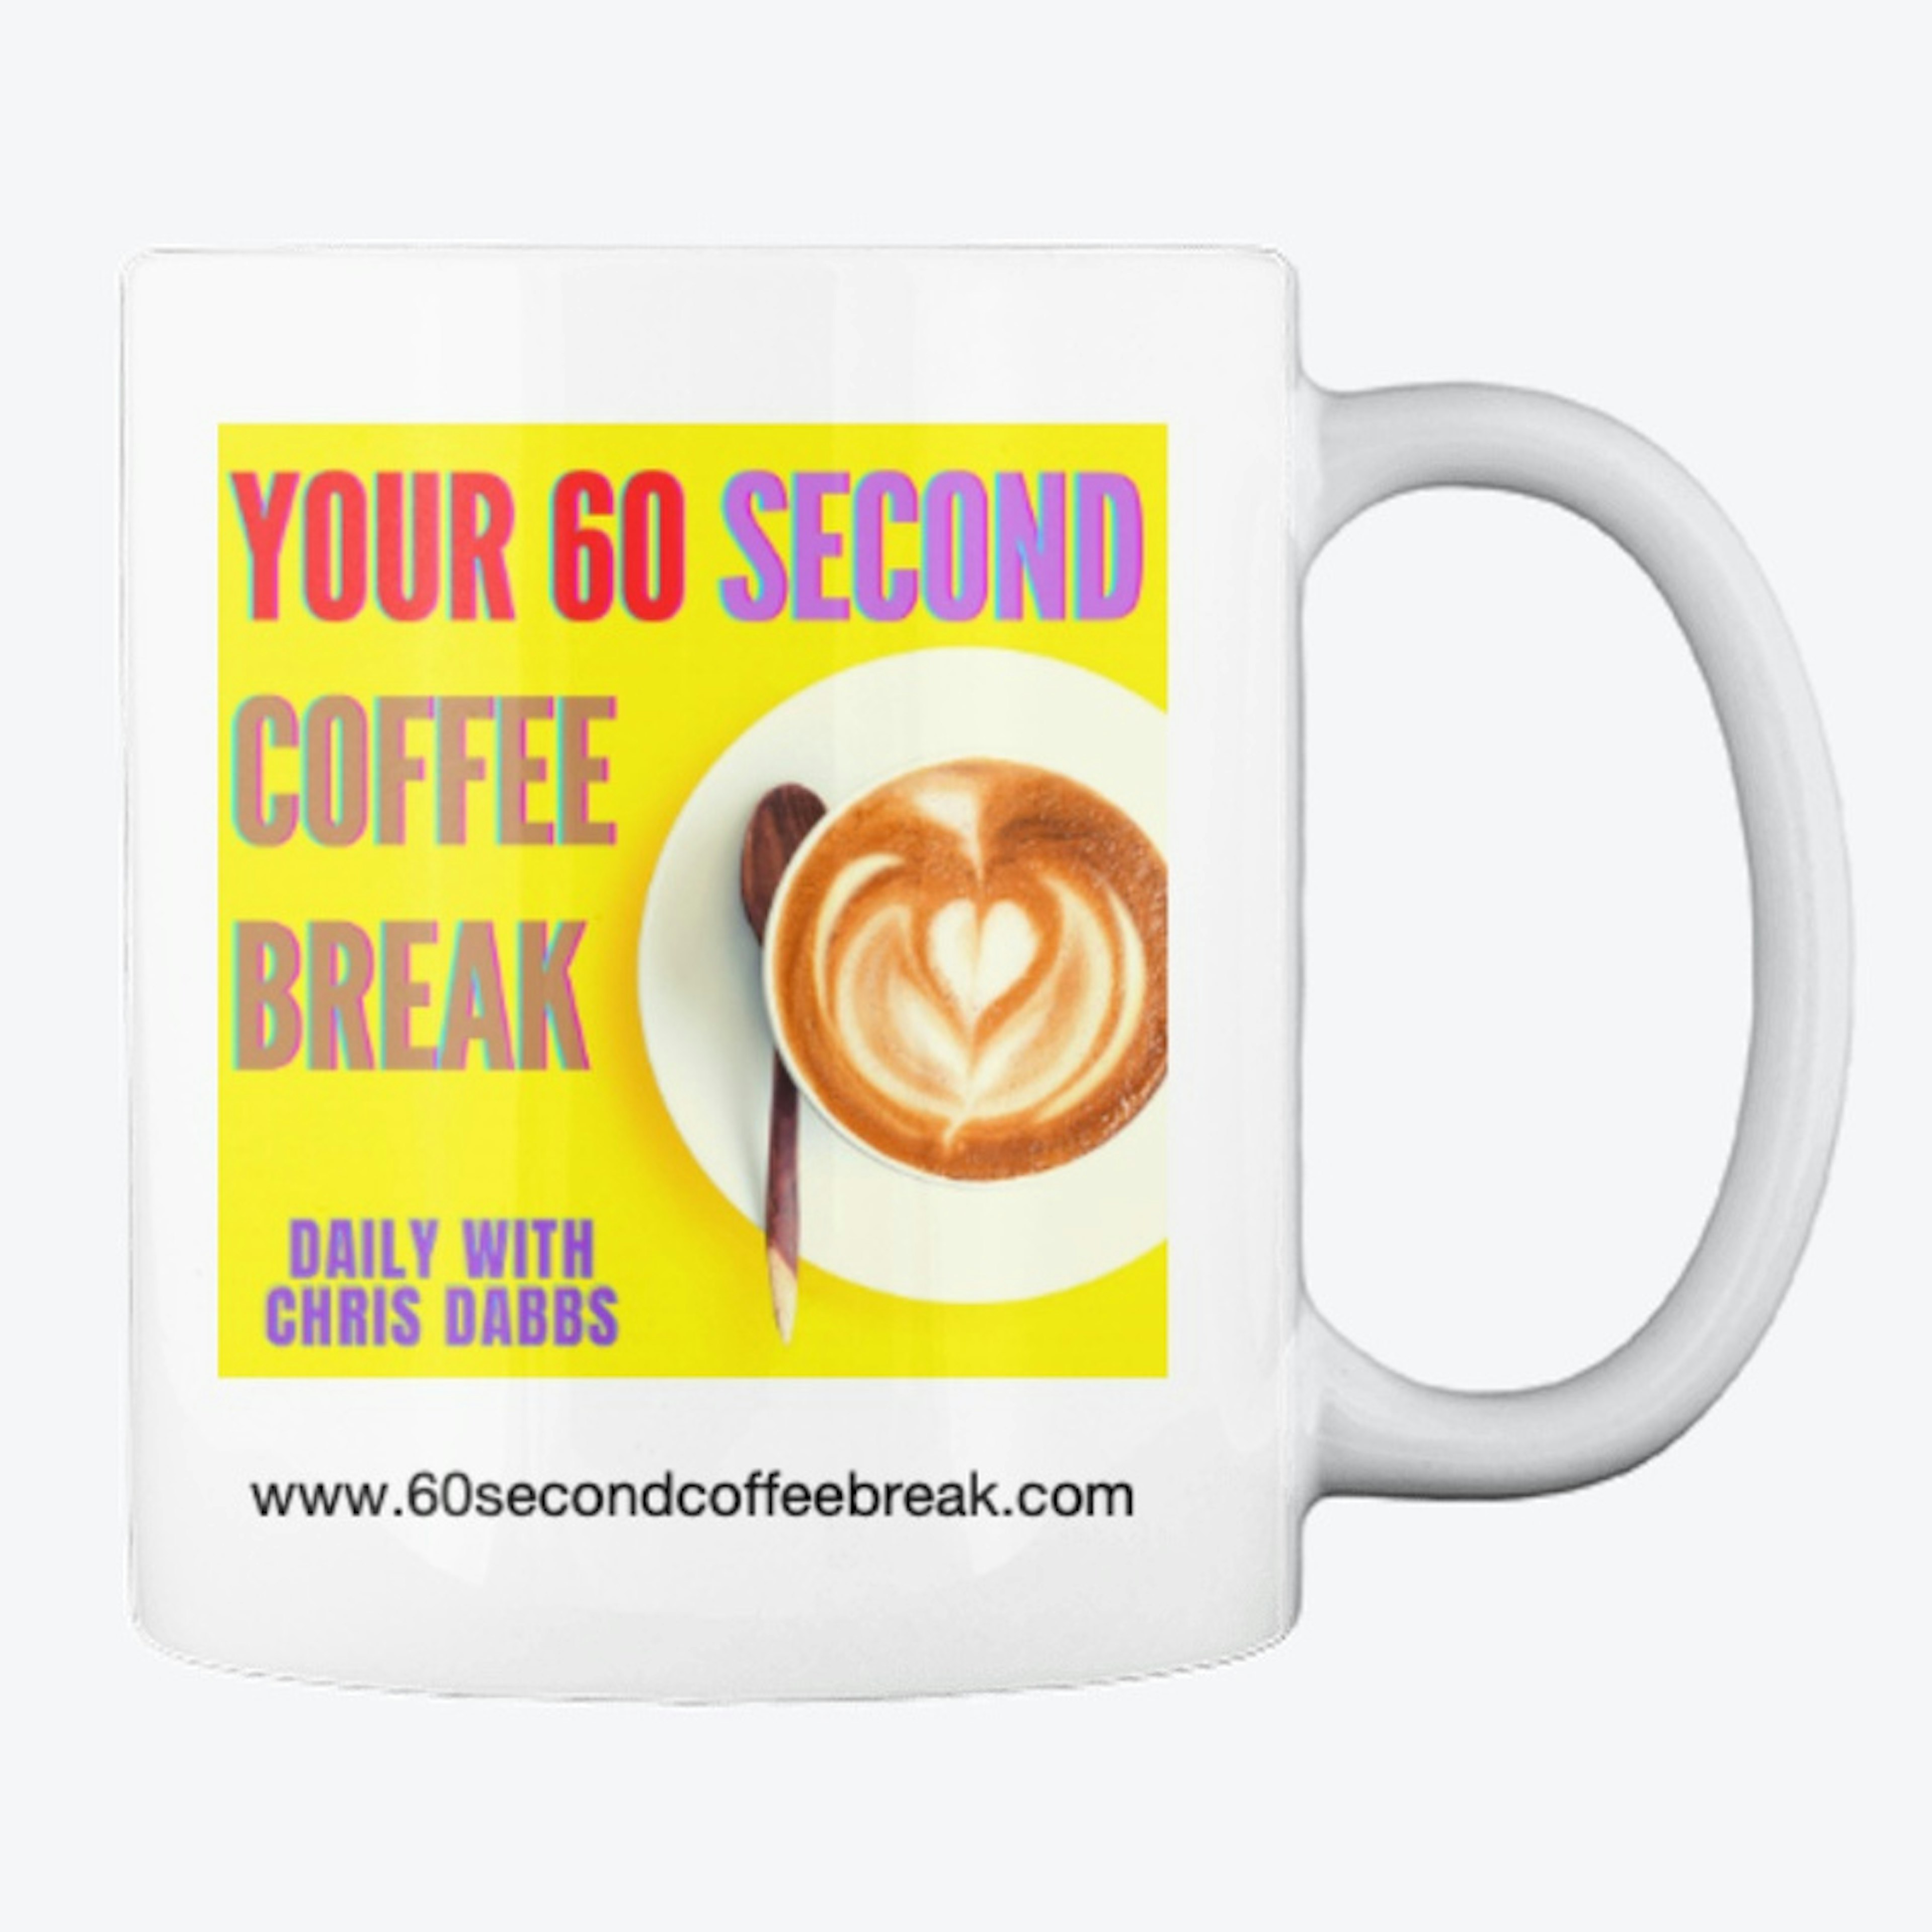 Your very own 60 Second Coffee Break Mug